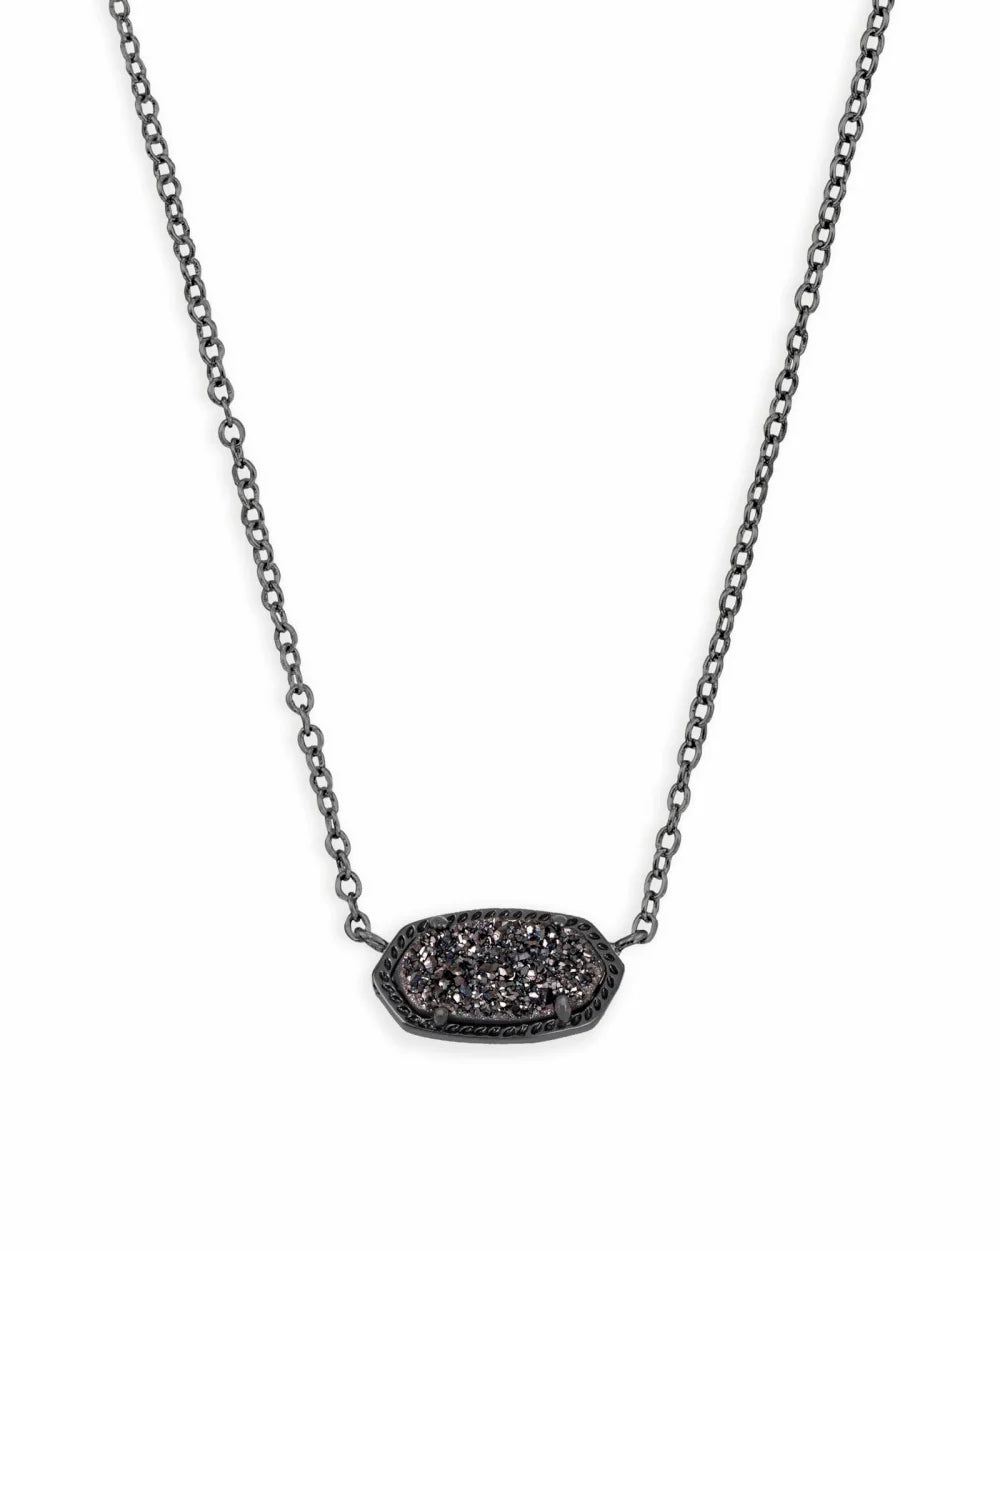 Kendra Scott: Elisa Gunmetal Pendant Necklace - Black Drusy | Makk Fashions